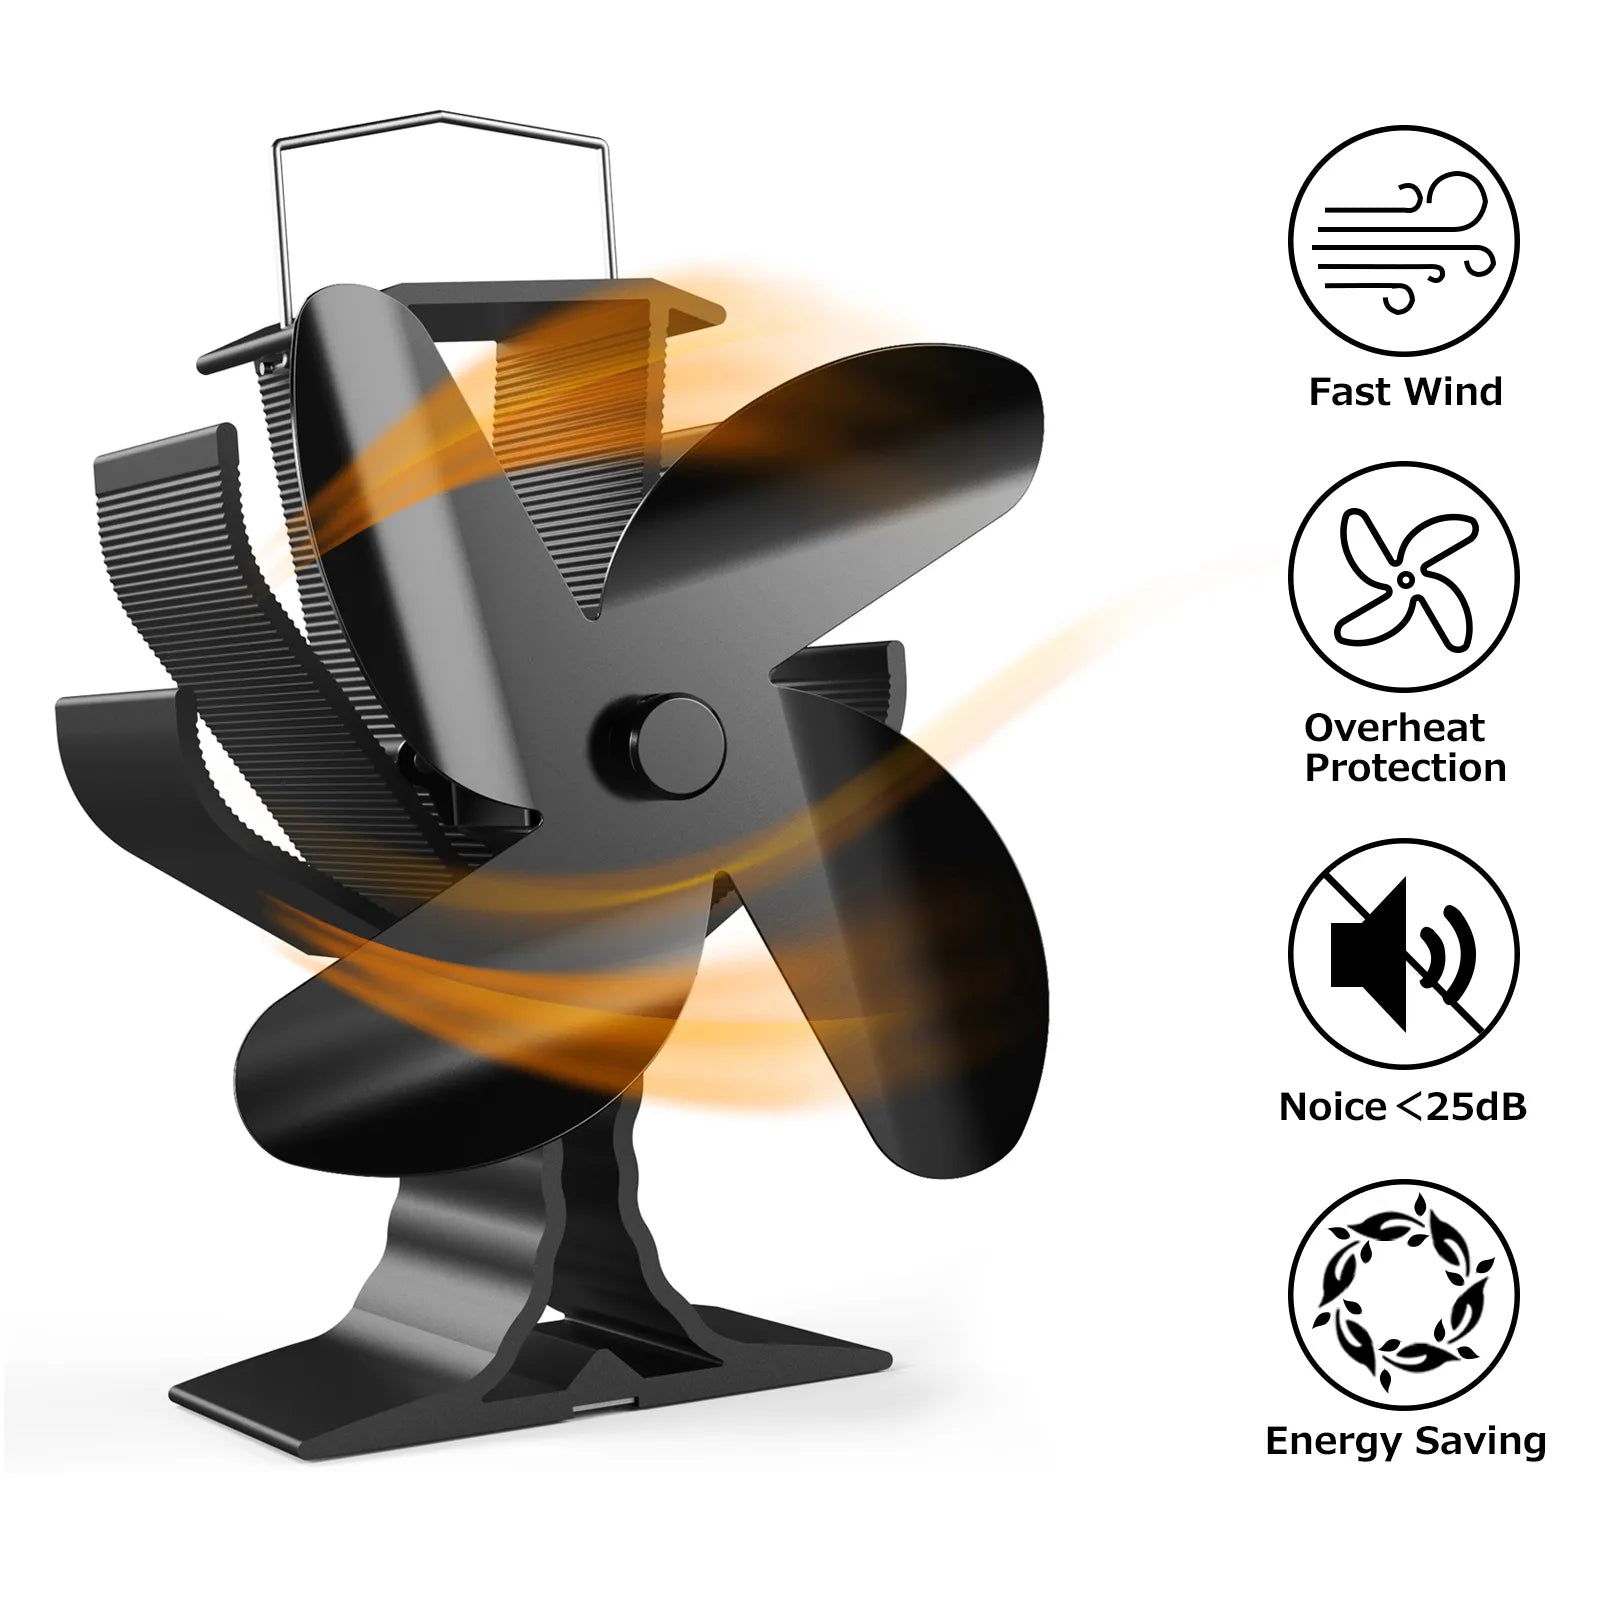 Buy 4-Blade Heat Powered Stove Fan for Wood / Log Burner/Fireplace